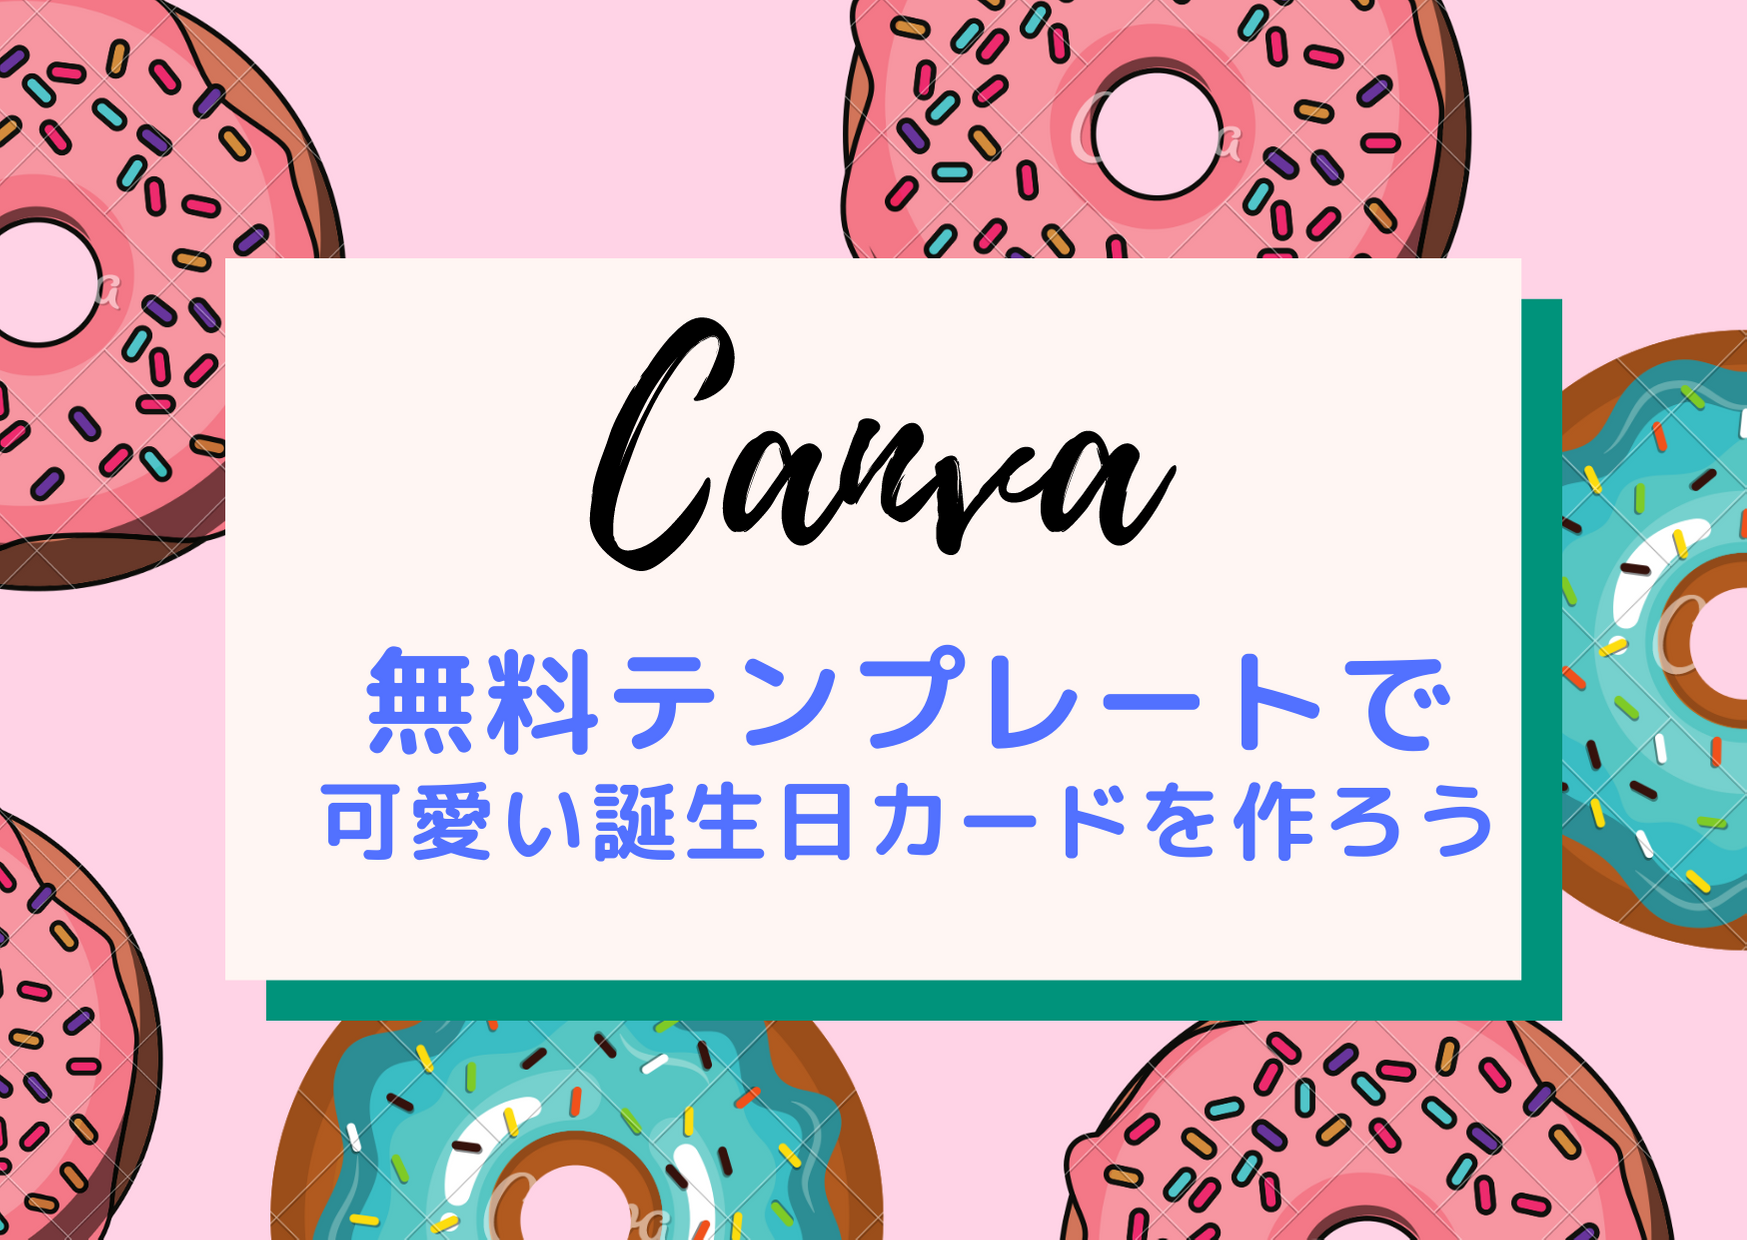 【Canva】無料のオンラインツールを使ったオシャレな誕生日カードの作り方 | My Pretty Party